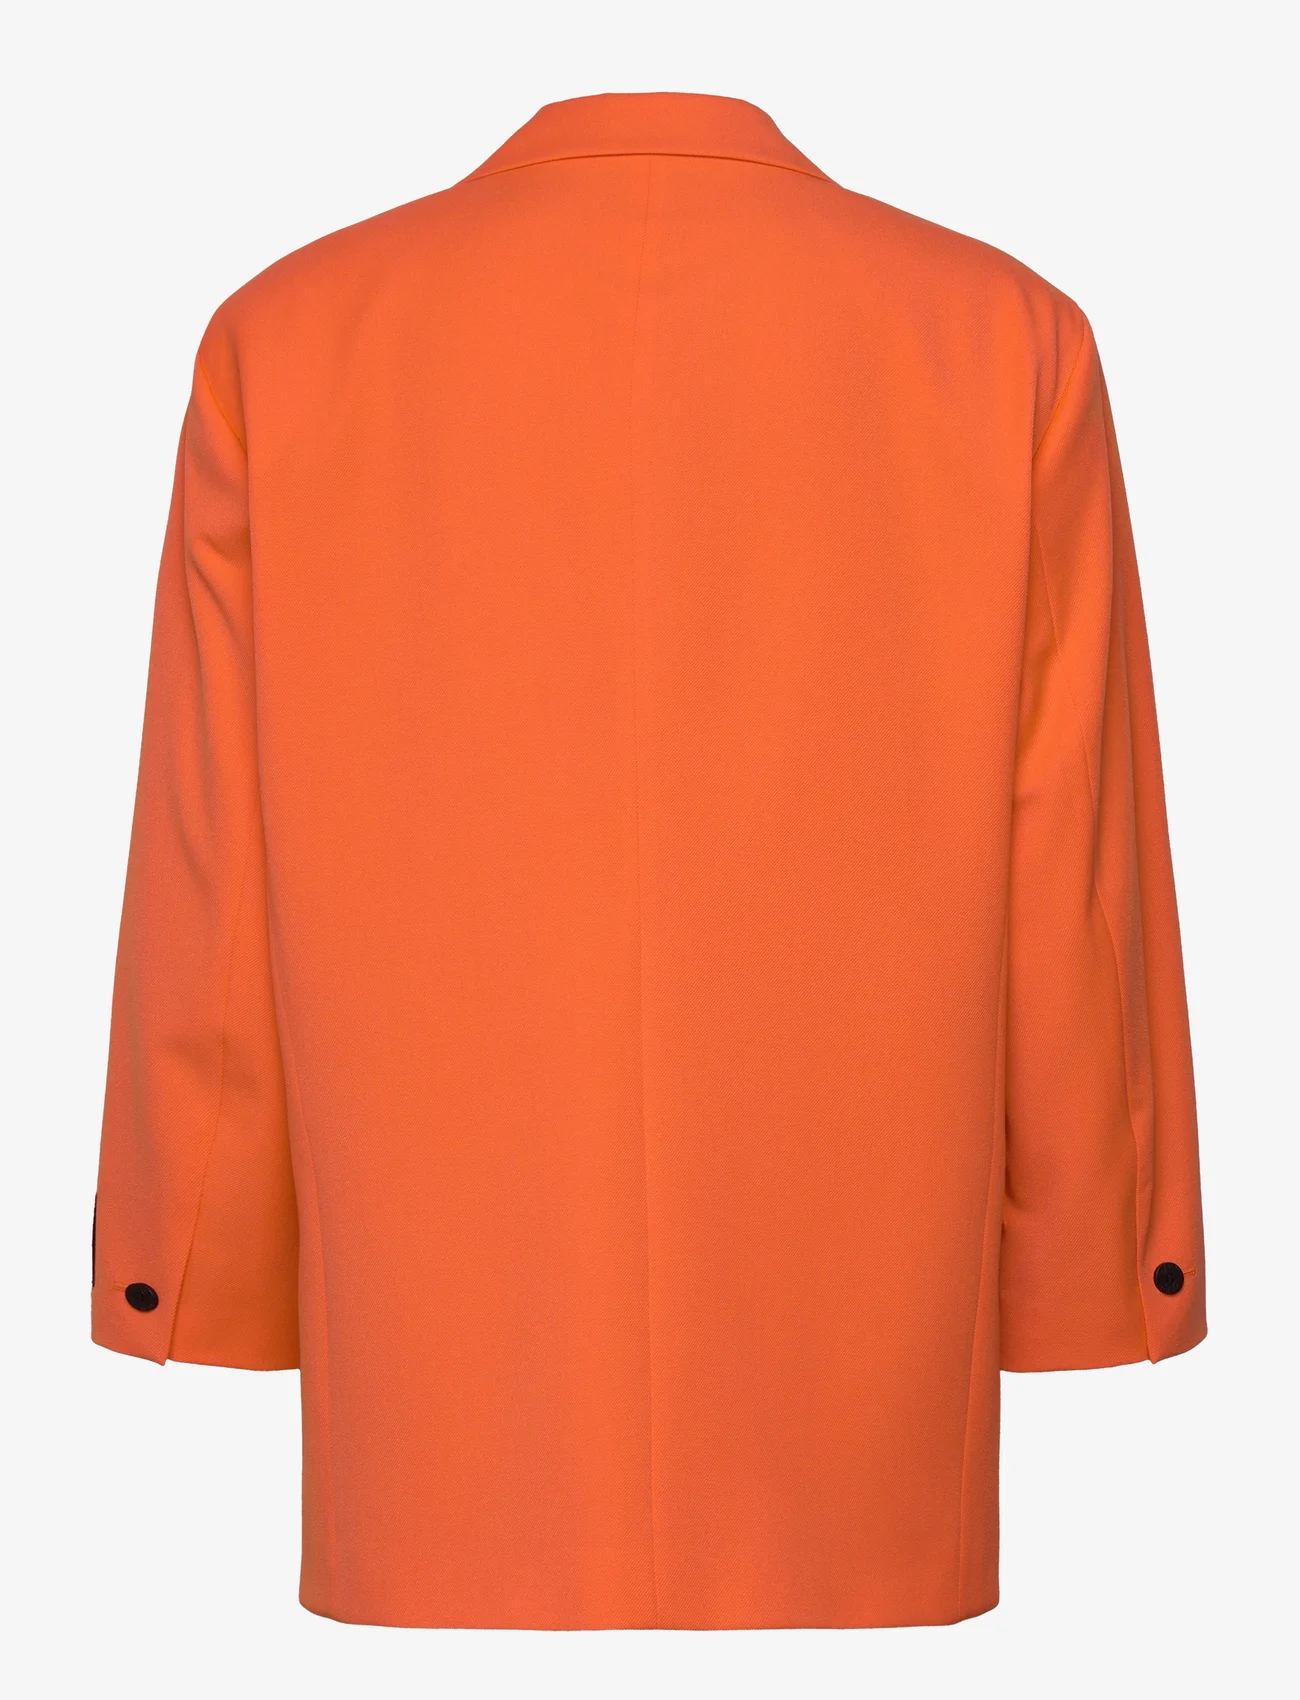 HUGO - Asabella - ballīšu apģērbs par outlet cenām - bright red - 1